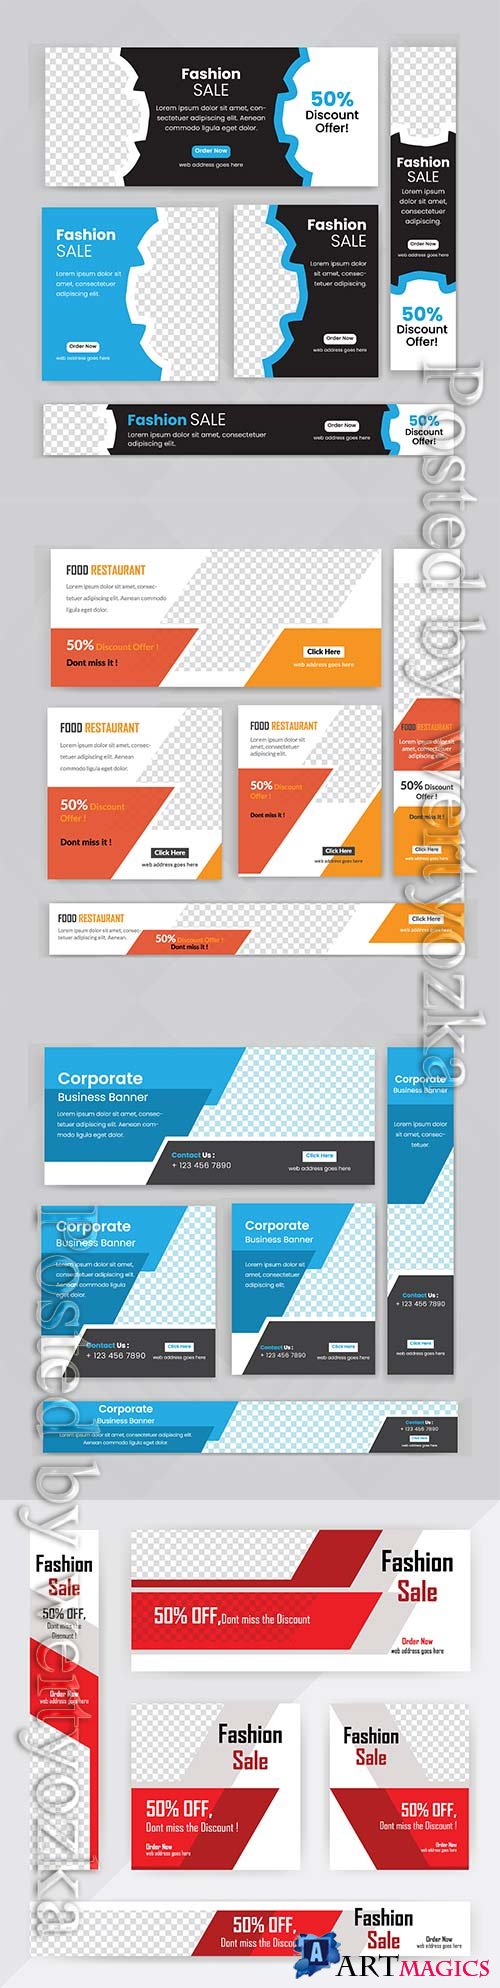 Web banner vector set design, business concept